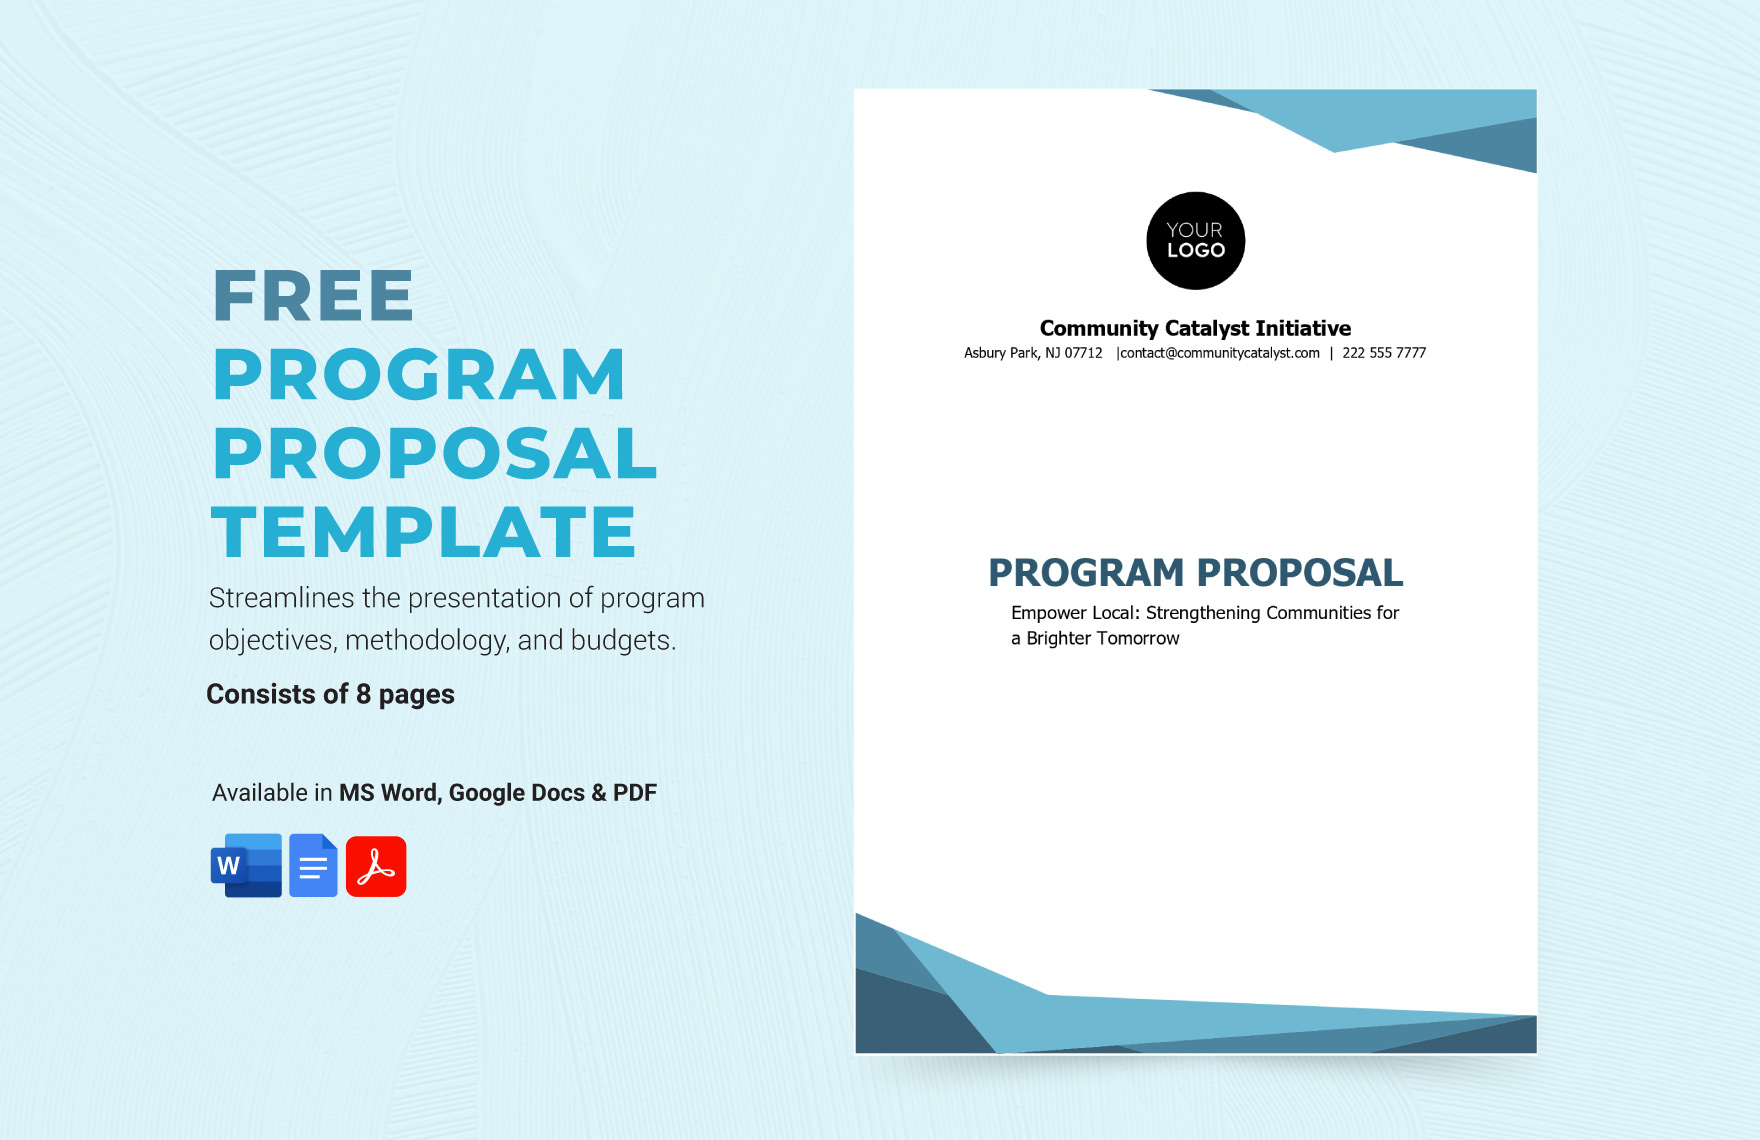 Program Proposal Template